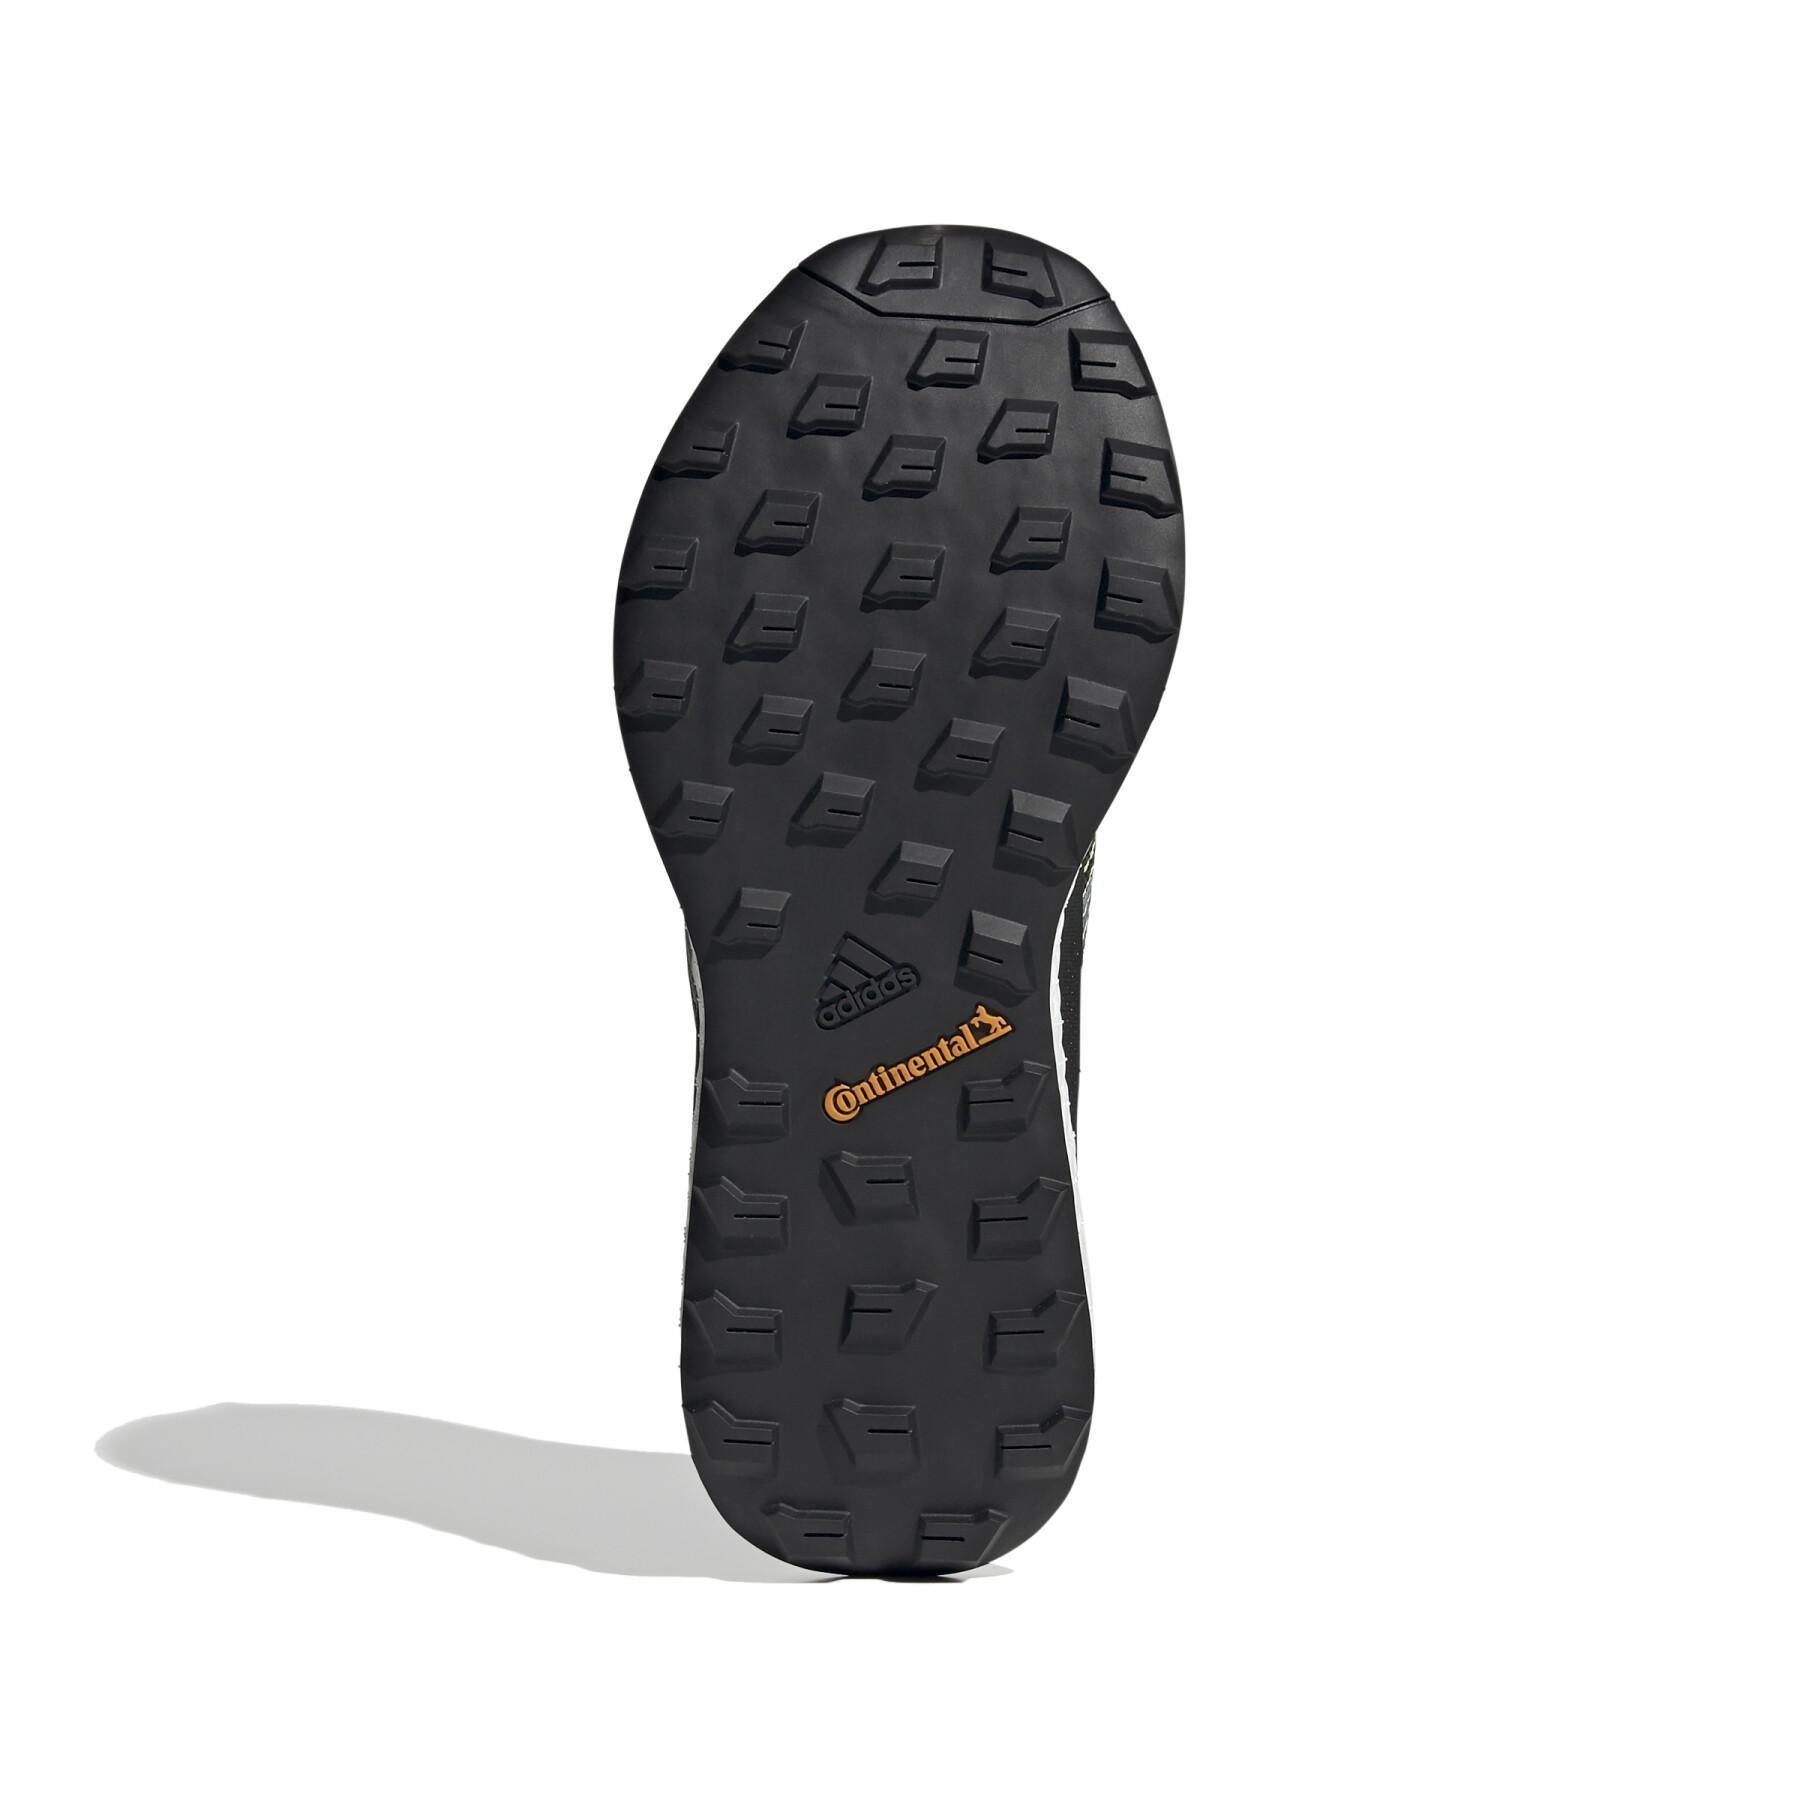 Damen-Trail-Schuhe adidas Terrex Two Ultra Parley